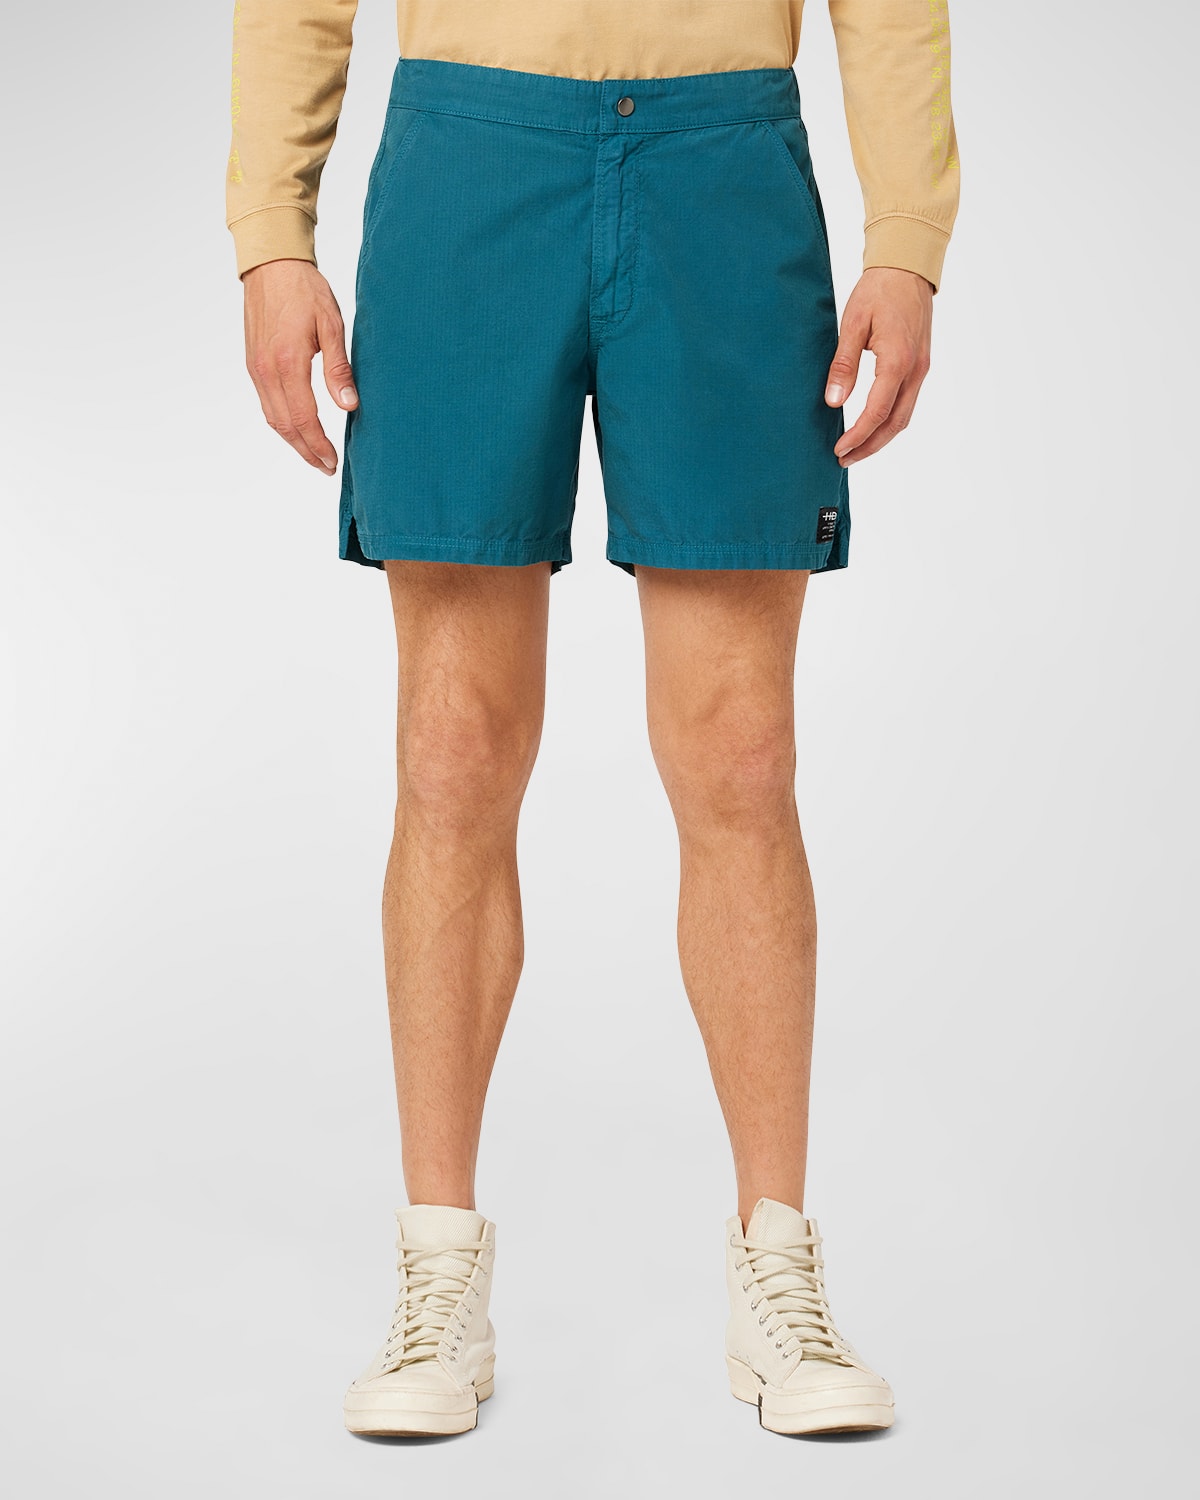 Men's Cotton Ripstop Shorts